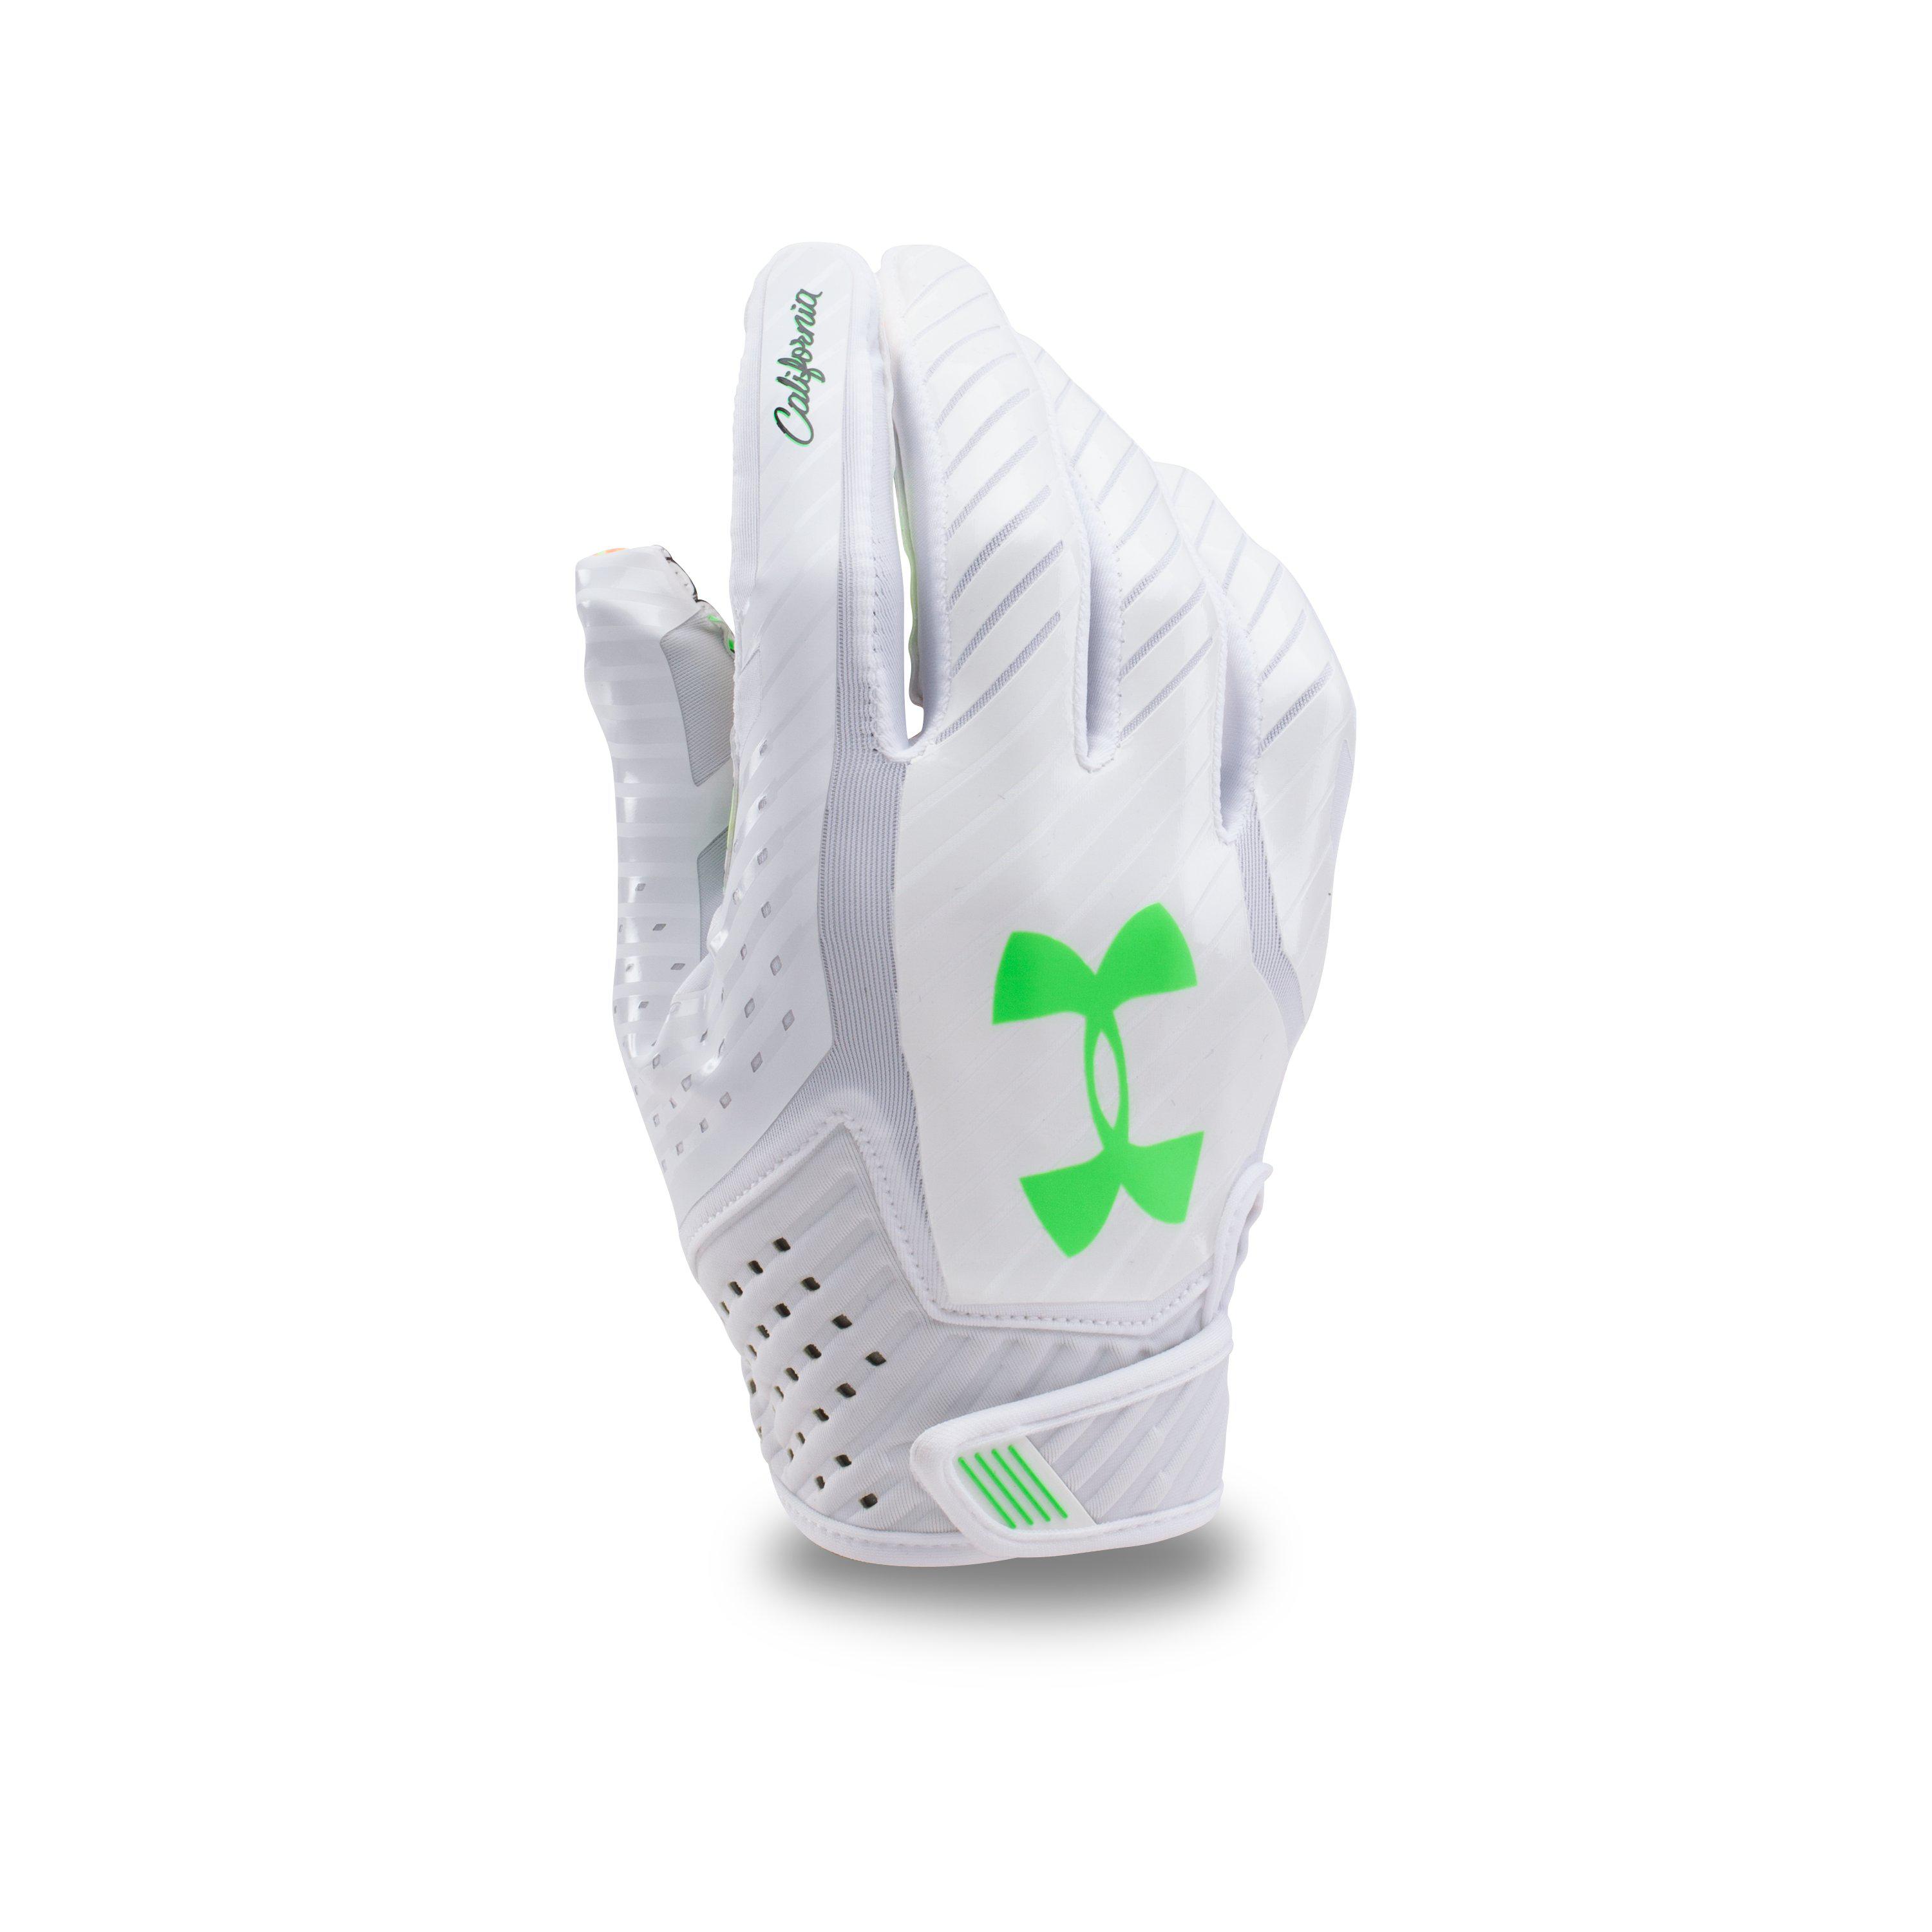 Under Armour UA Spotlight Limited Edition Football Gloves 1326226-103 Large NWT 